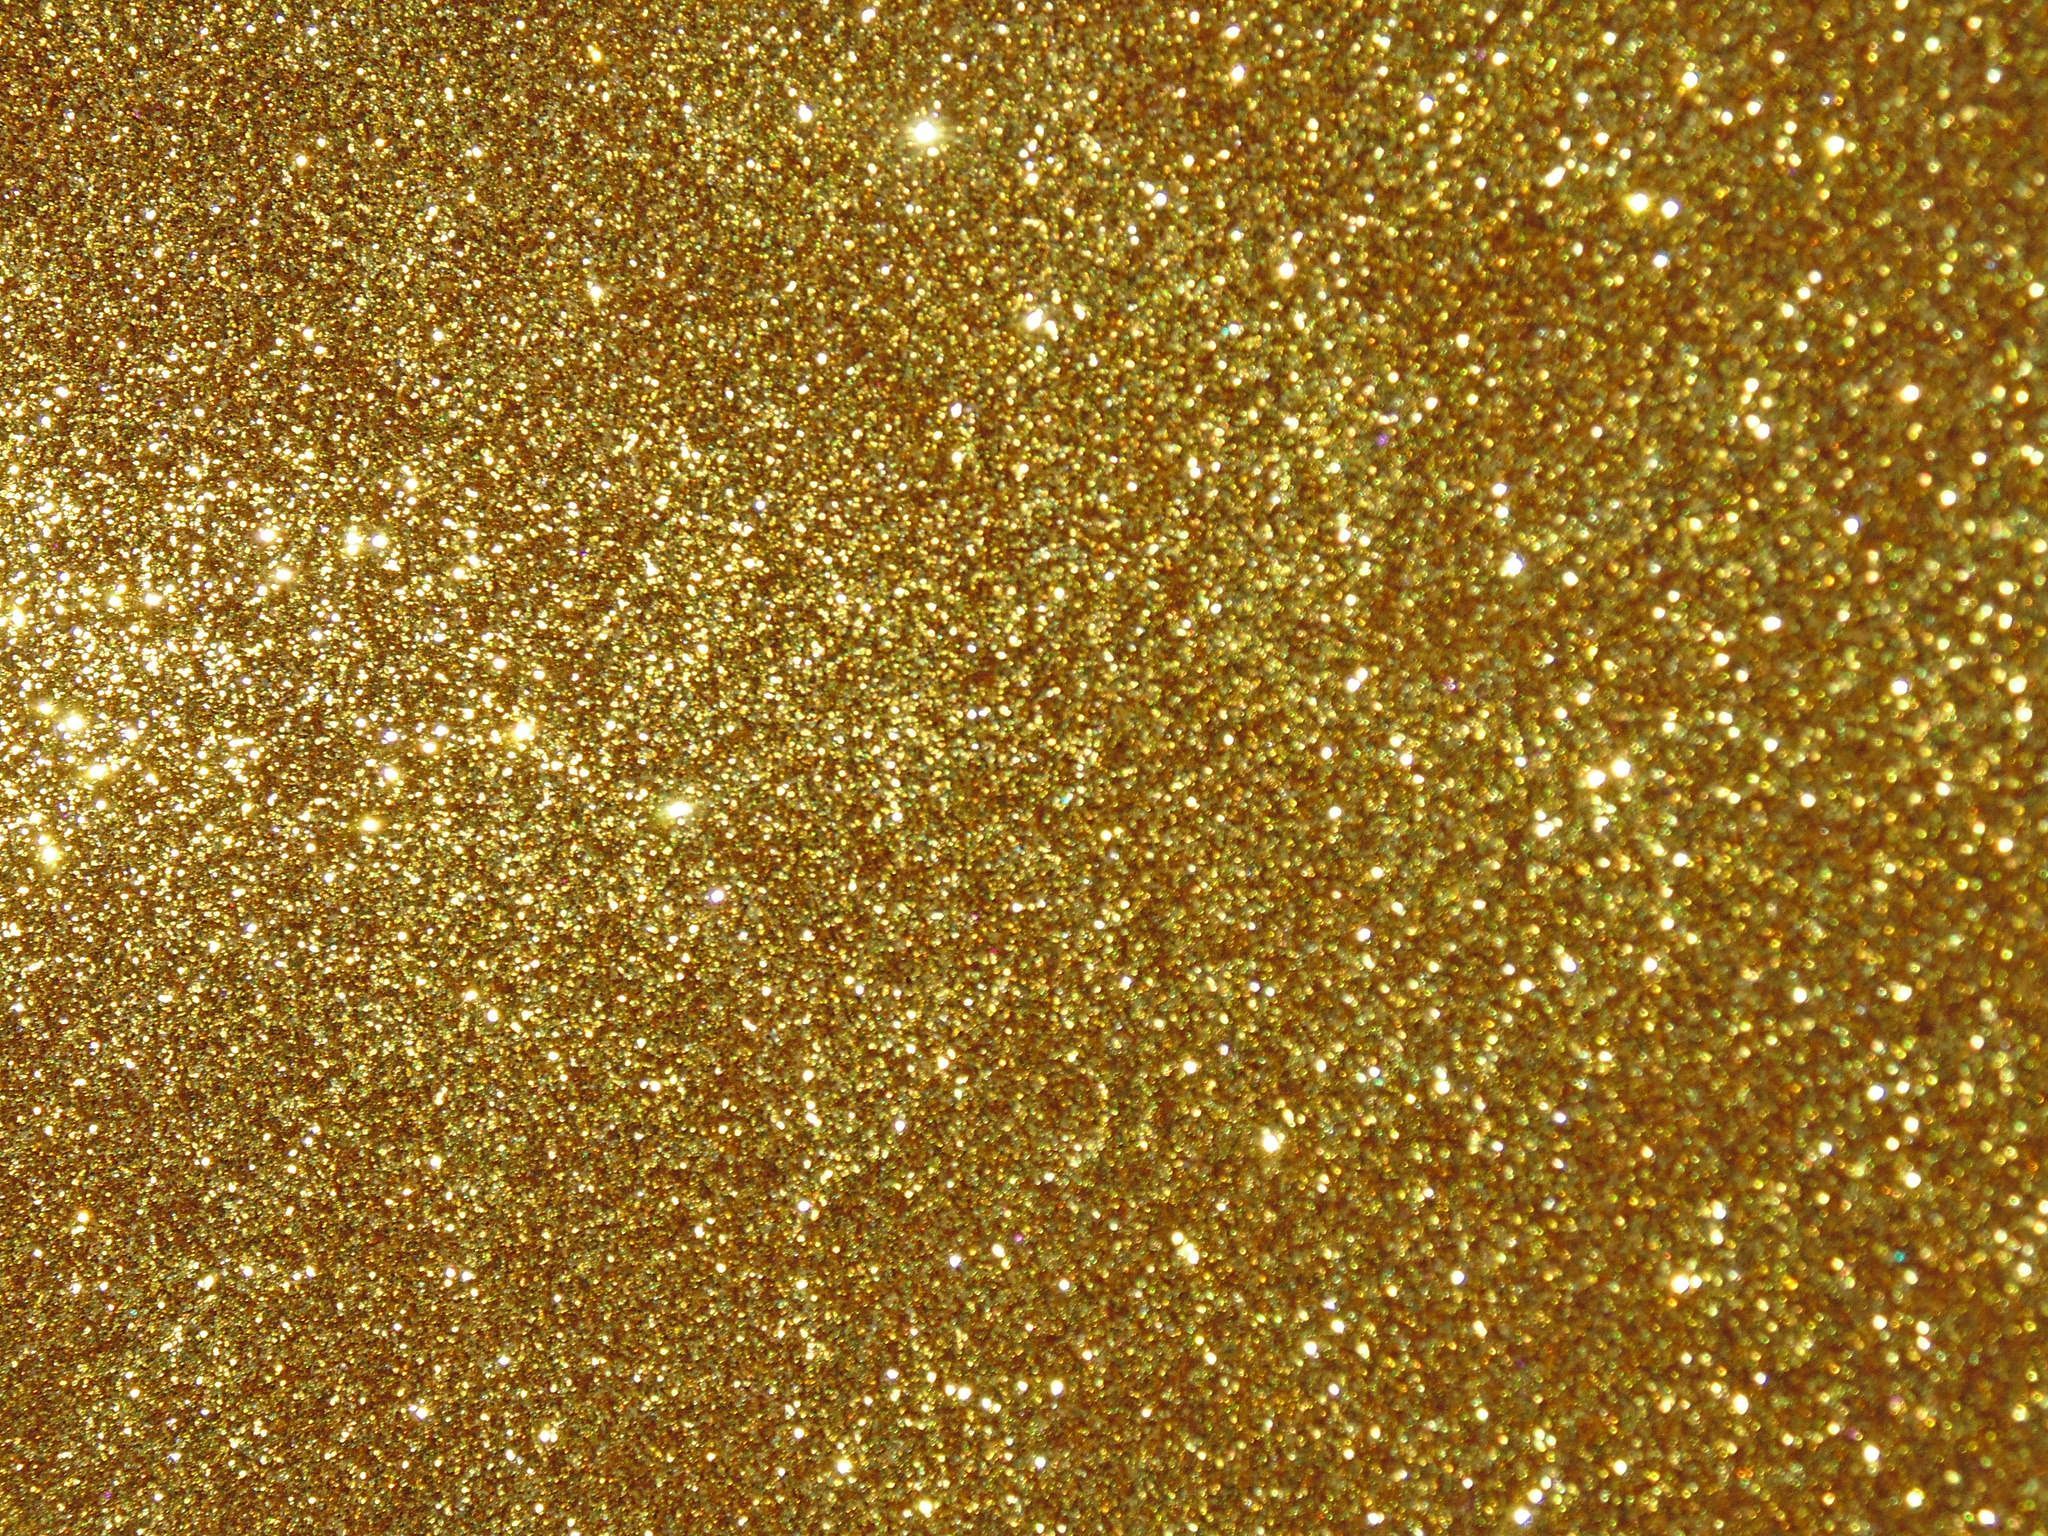 Gold Glitter Wallpaper HD. HD Wallpaper, Background, Image. Gold glitter wallpaper hd, Gold glitter background, Gold sparkle wallpaper